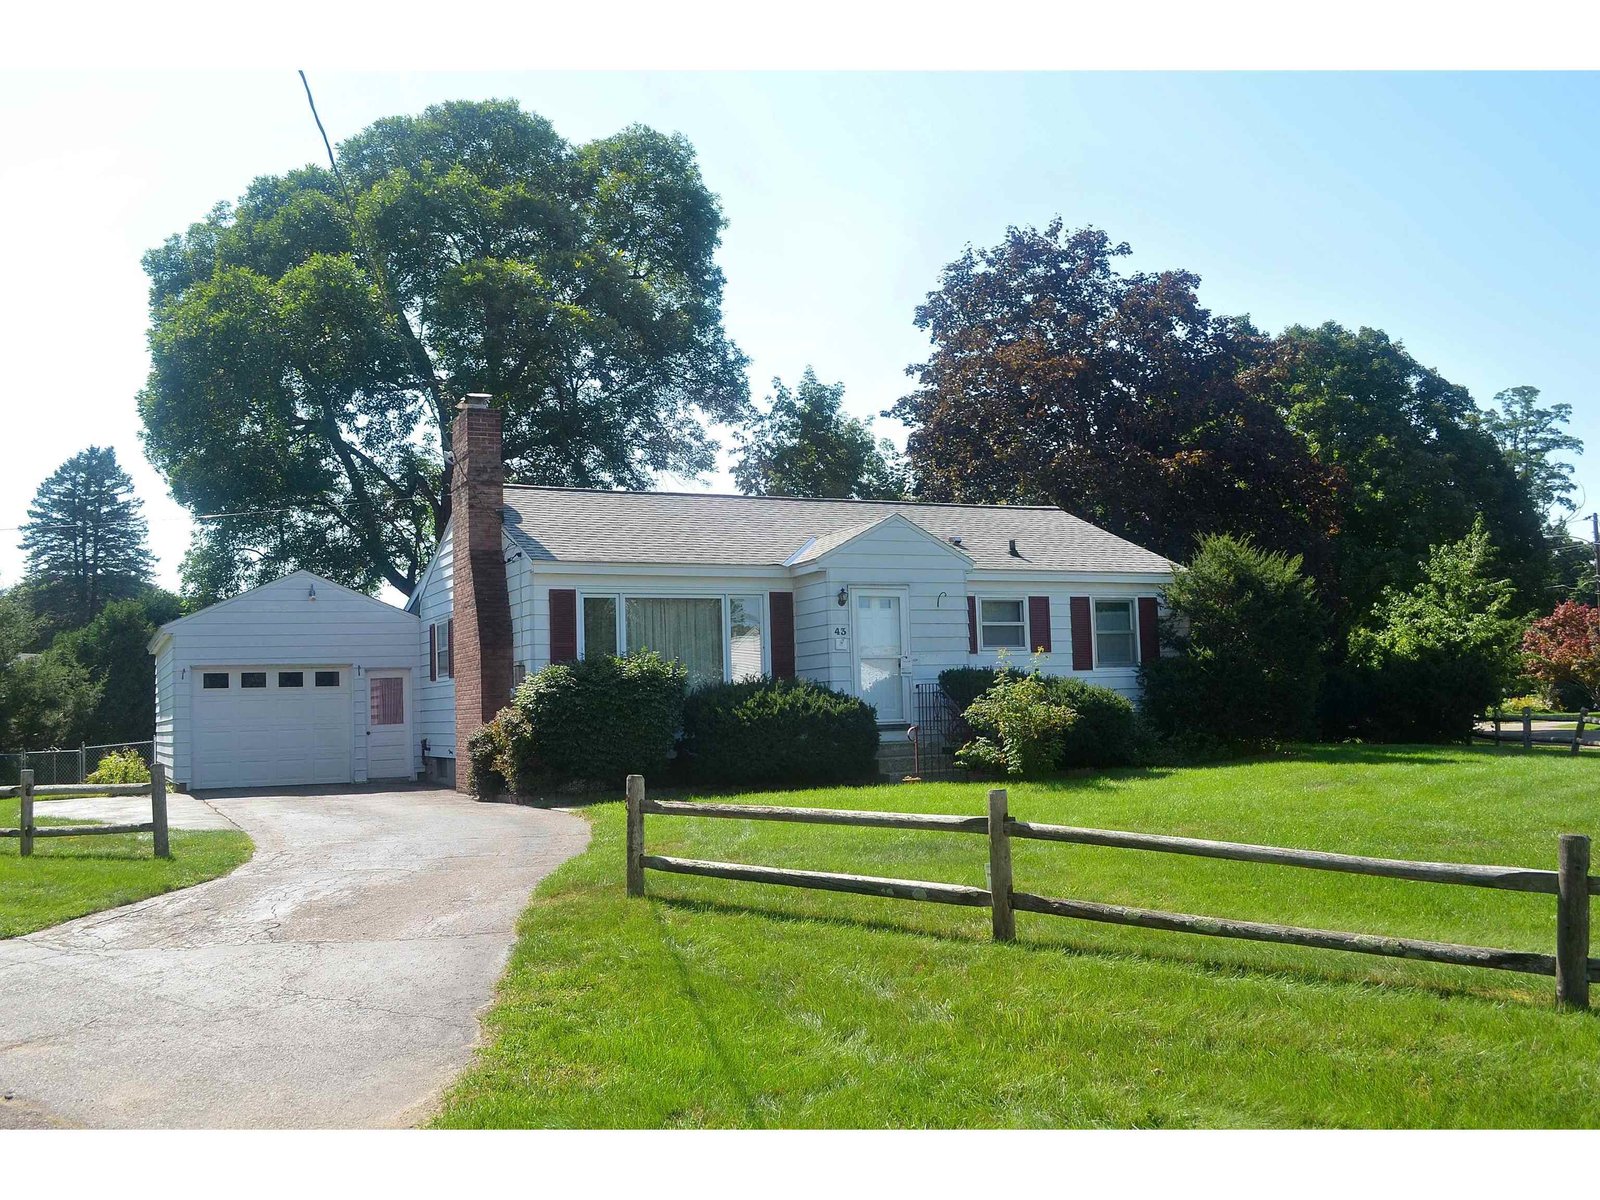 Sold property in South Burlington